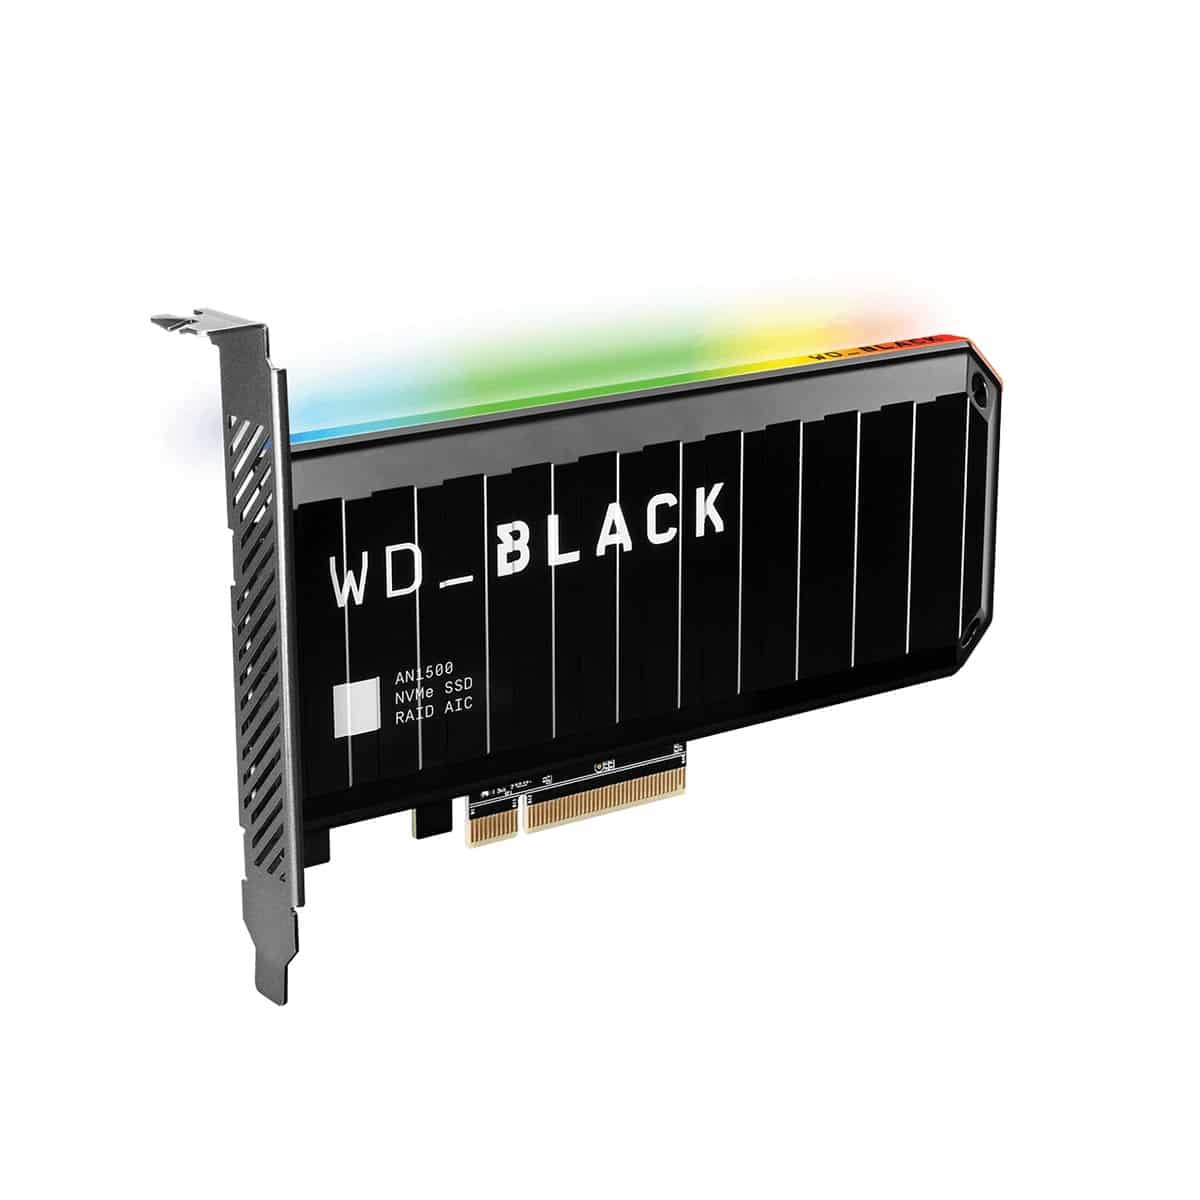 WD_BLACK SN850 NVMe SSD - wd black an1500 nvme ssd.png.thumb .1280.1280 - ภาพที่ 7